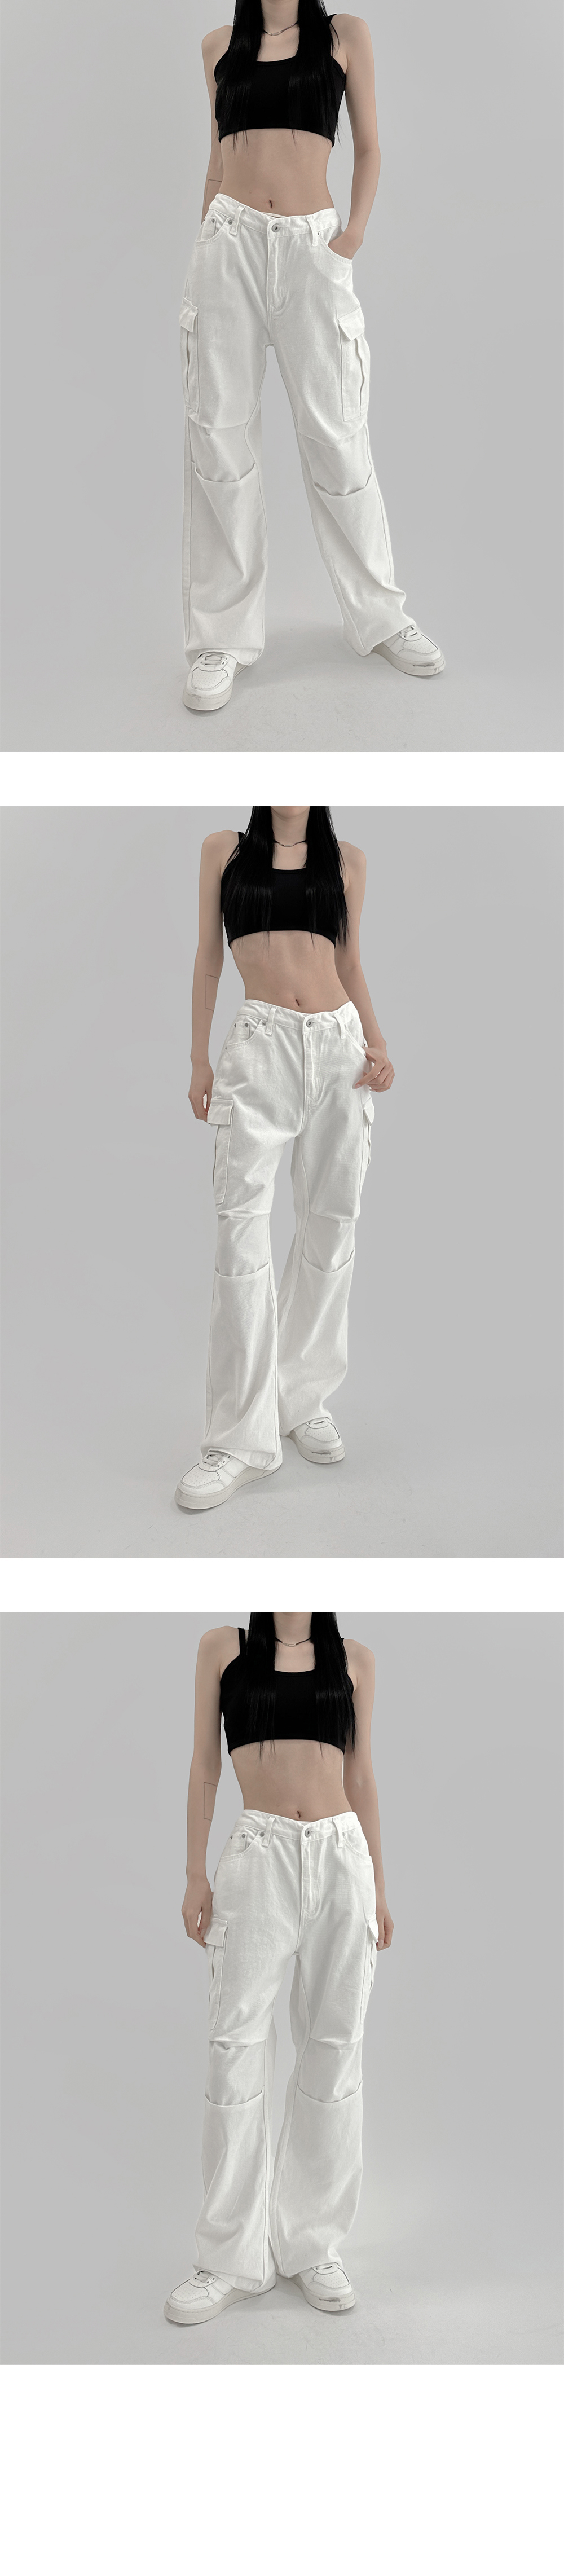 suspenders skirt/pants grey color image-S1L31